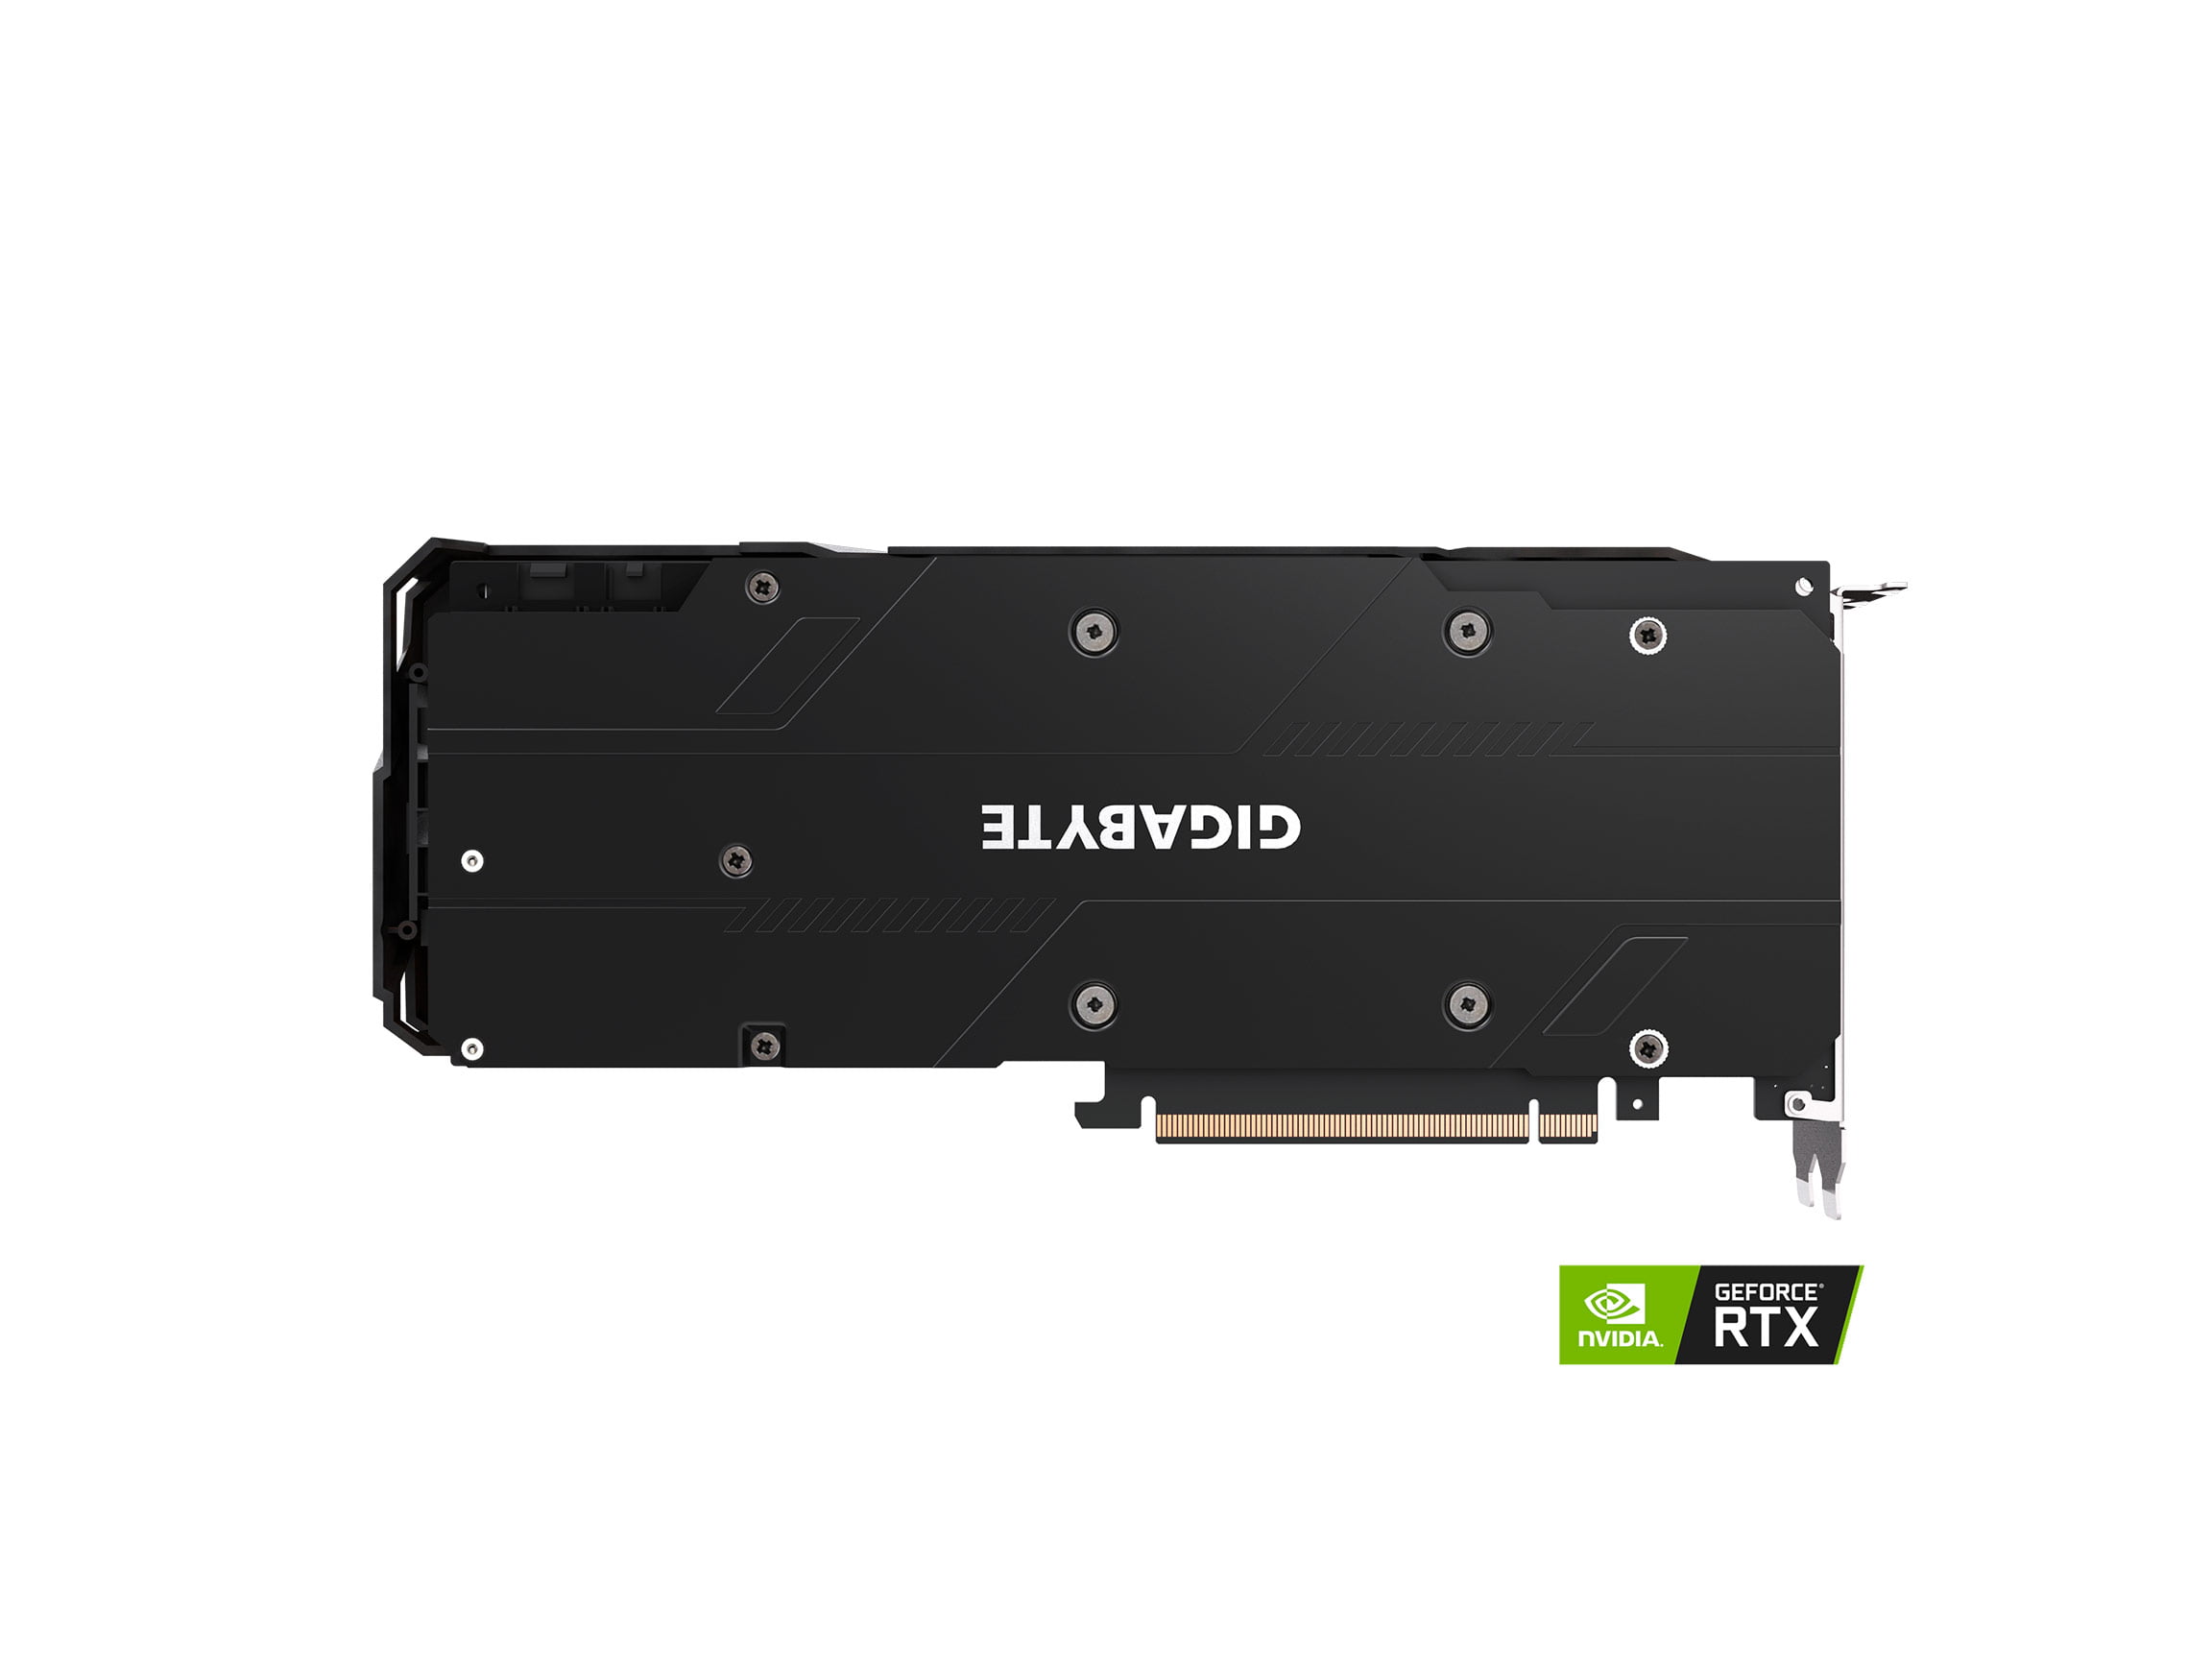 Gigabyte GeForce RTX 2070 Windforce 8G Graphics Card GV-N2070WF3